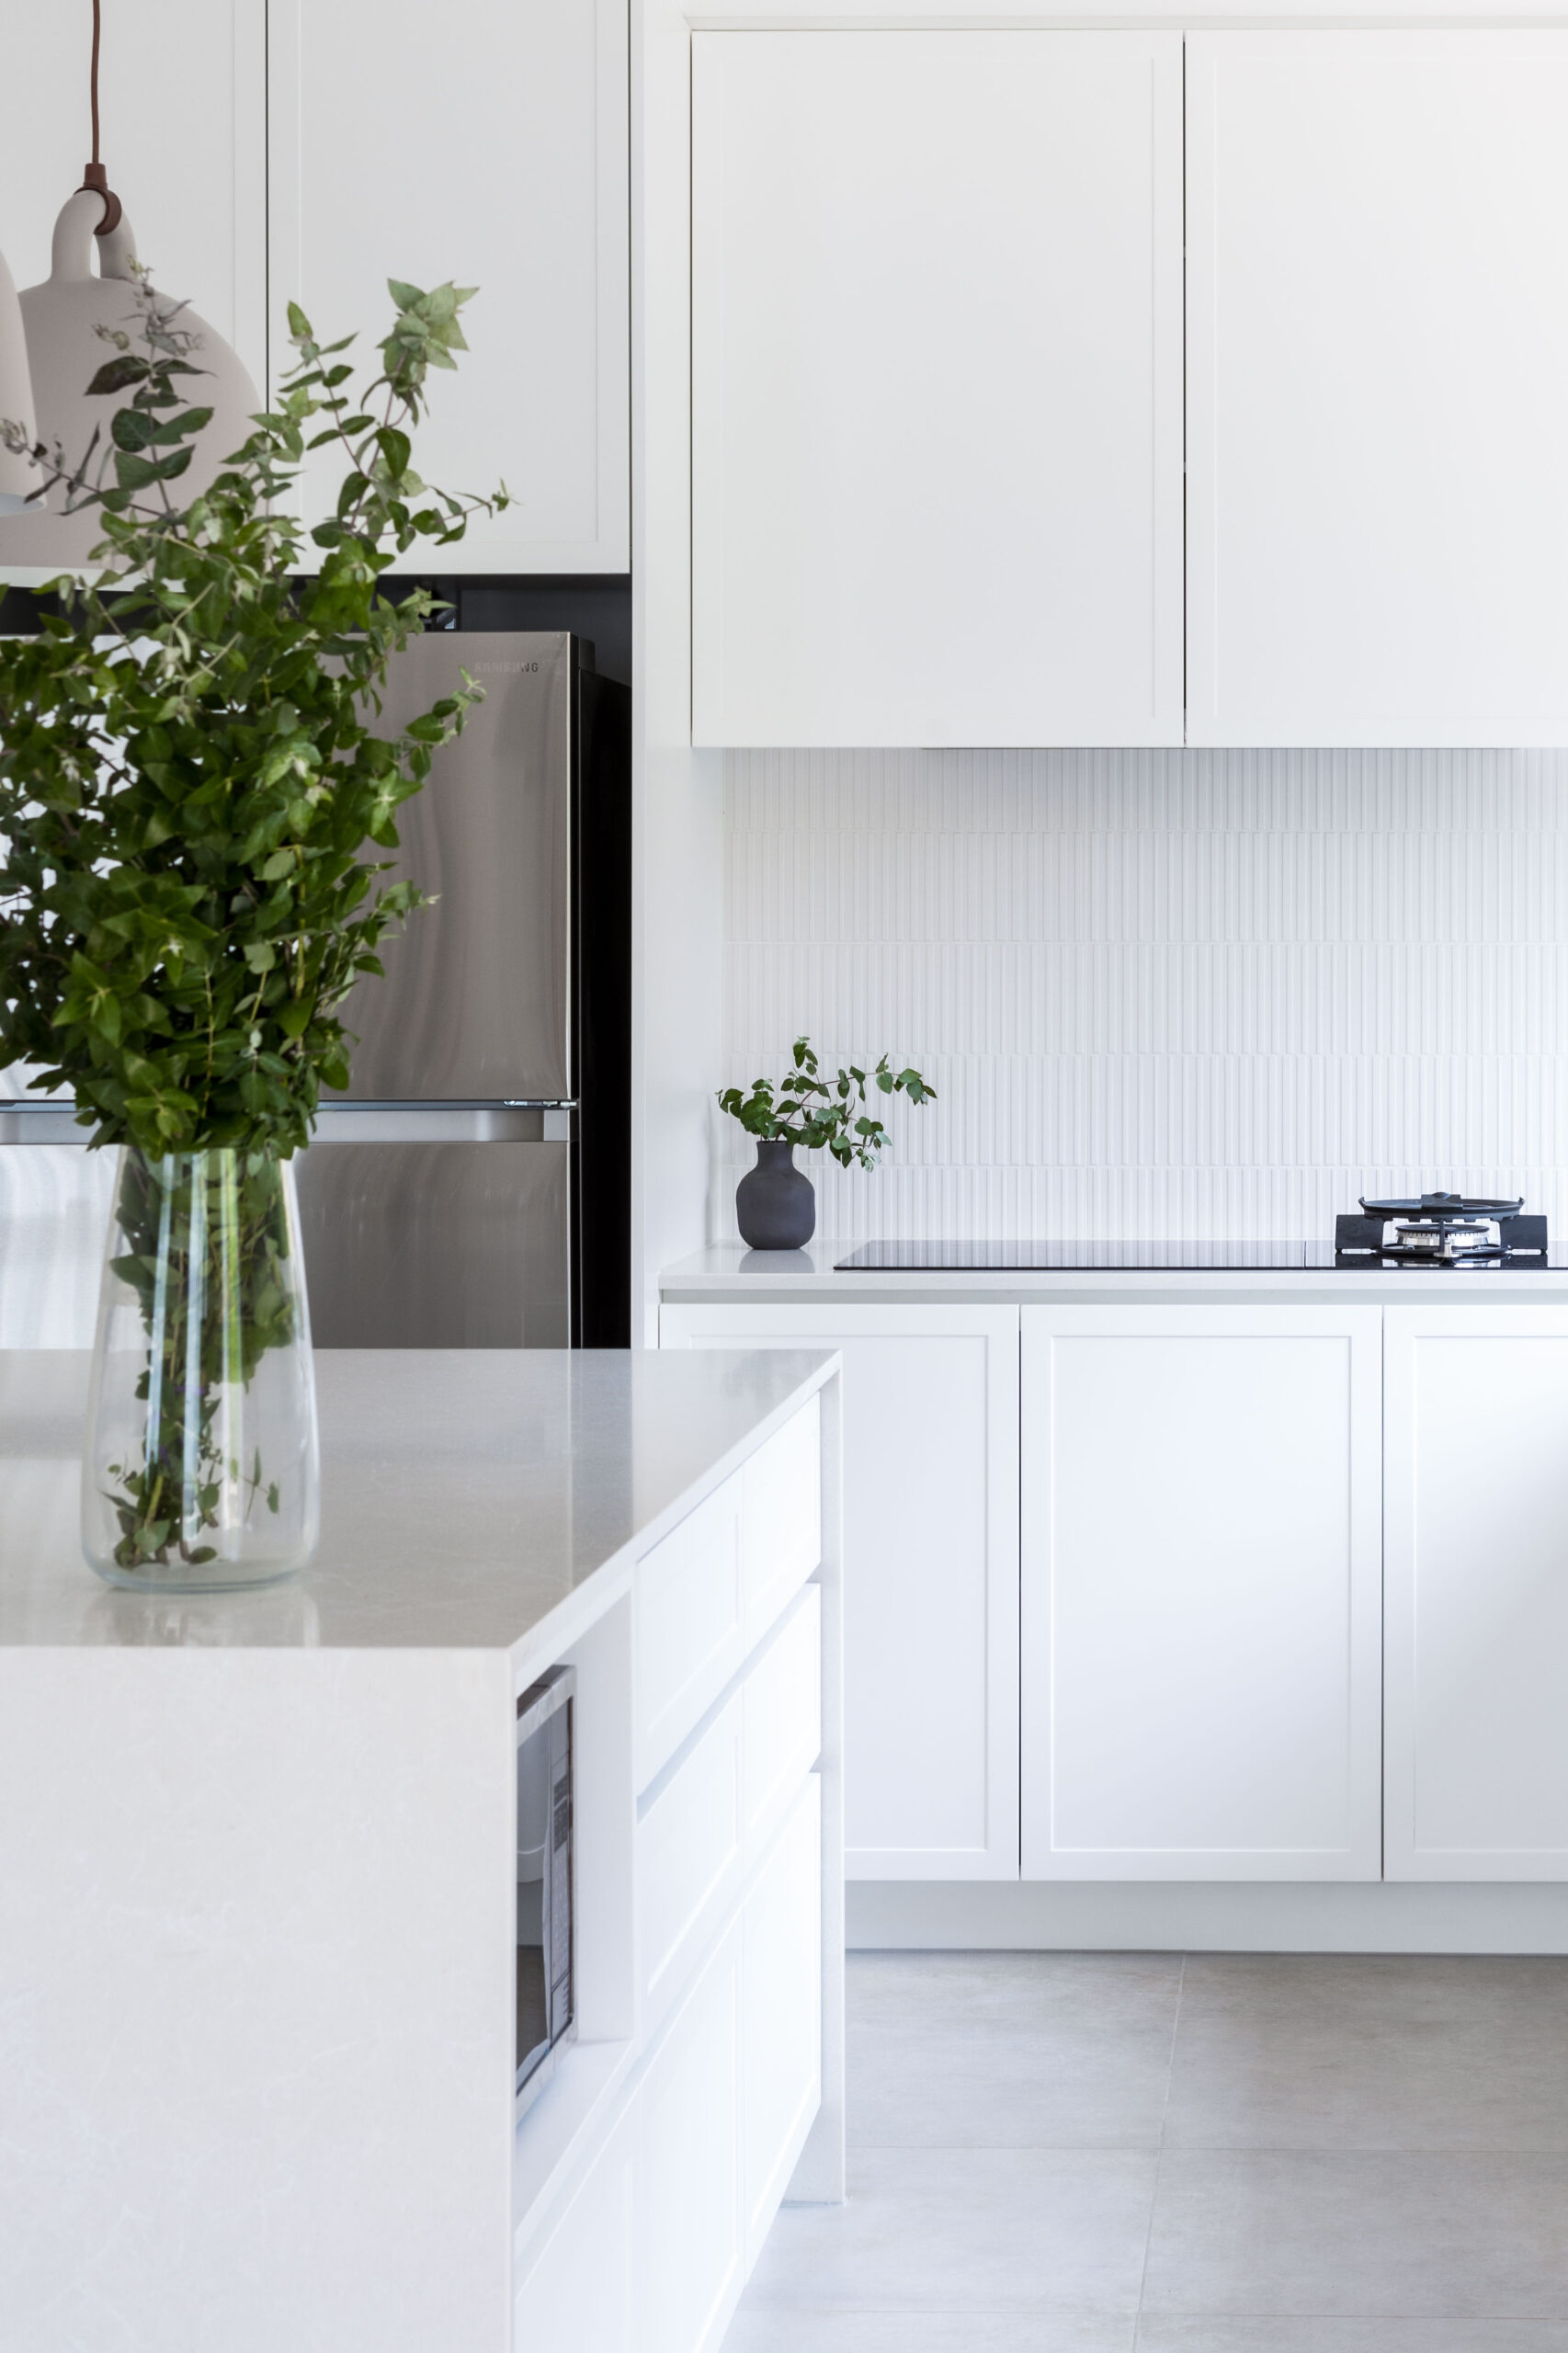 Balwyn Shaker style kitchen in white with light grey floor tile